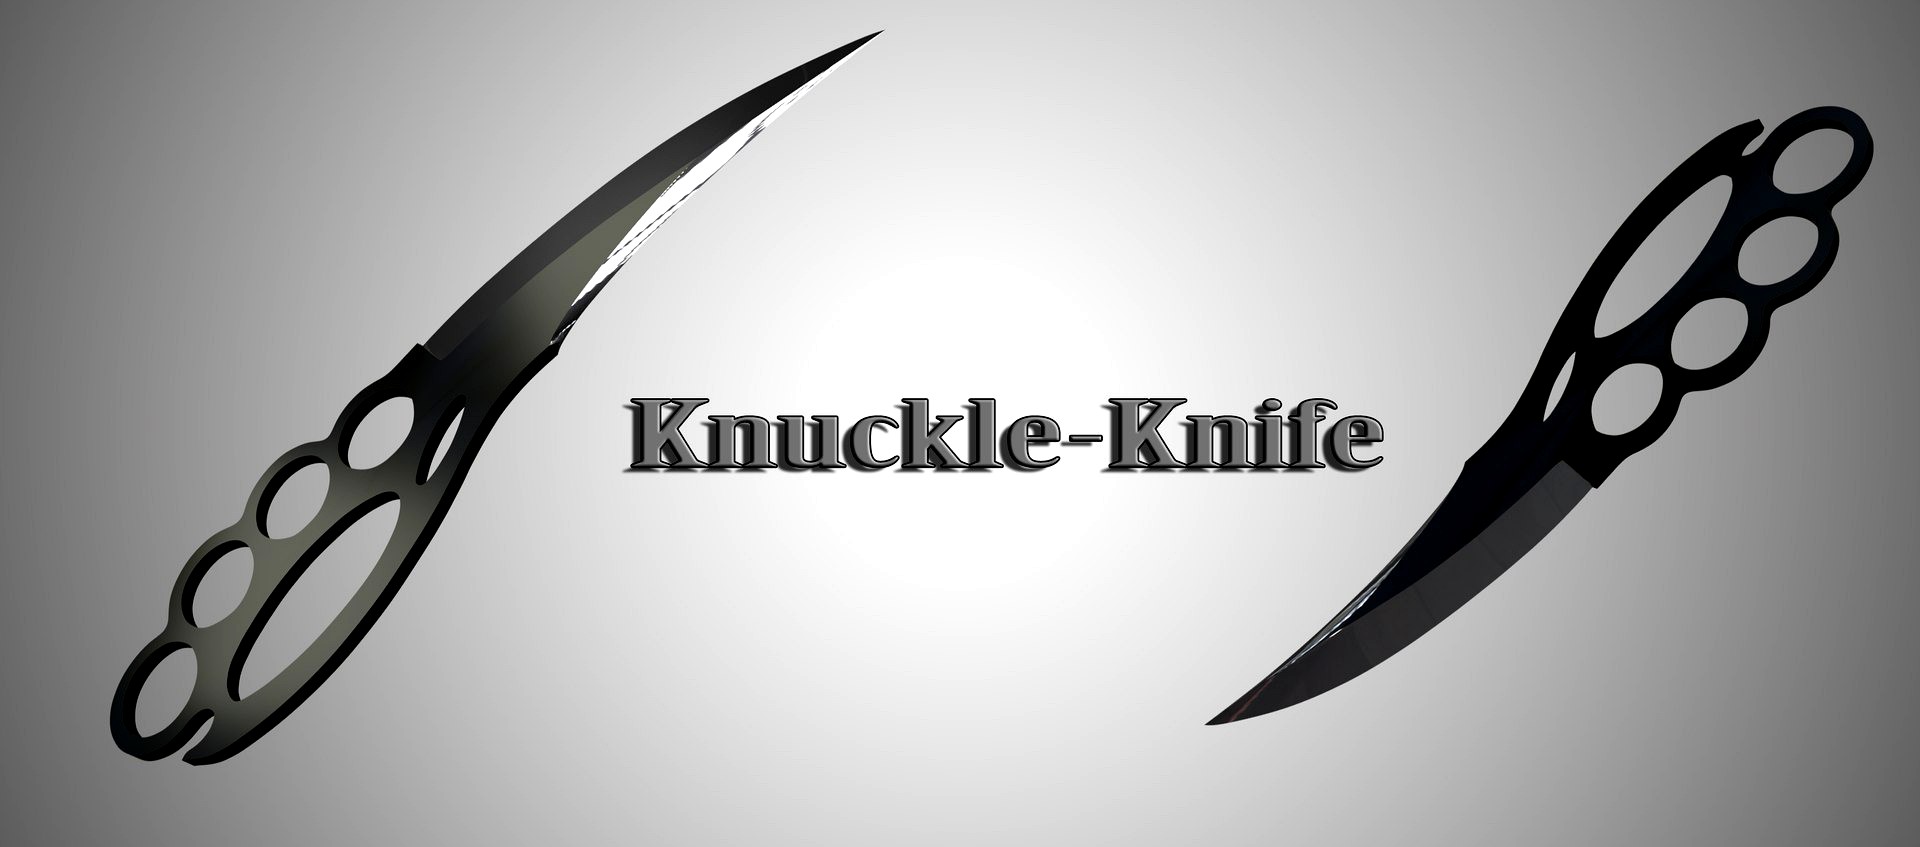 Knuckle-Knife